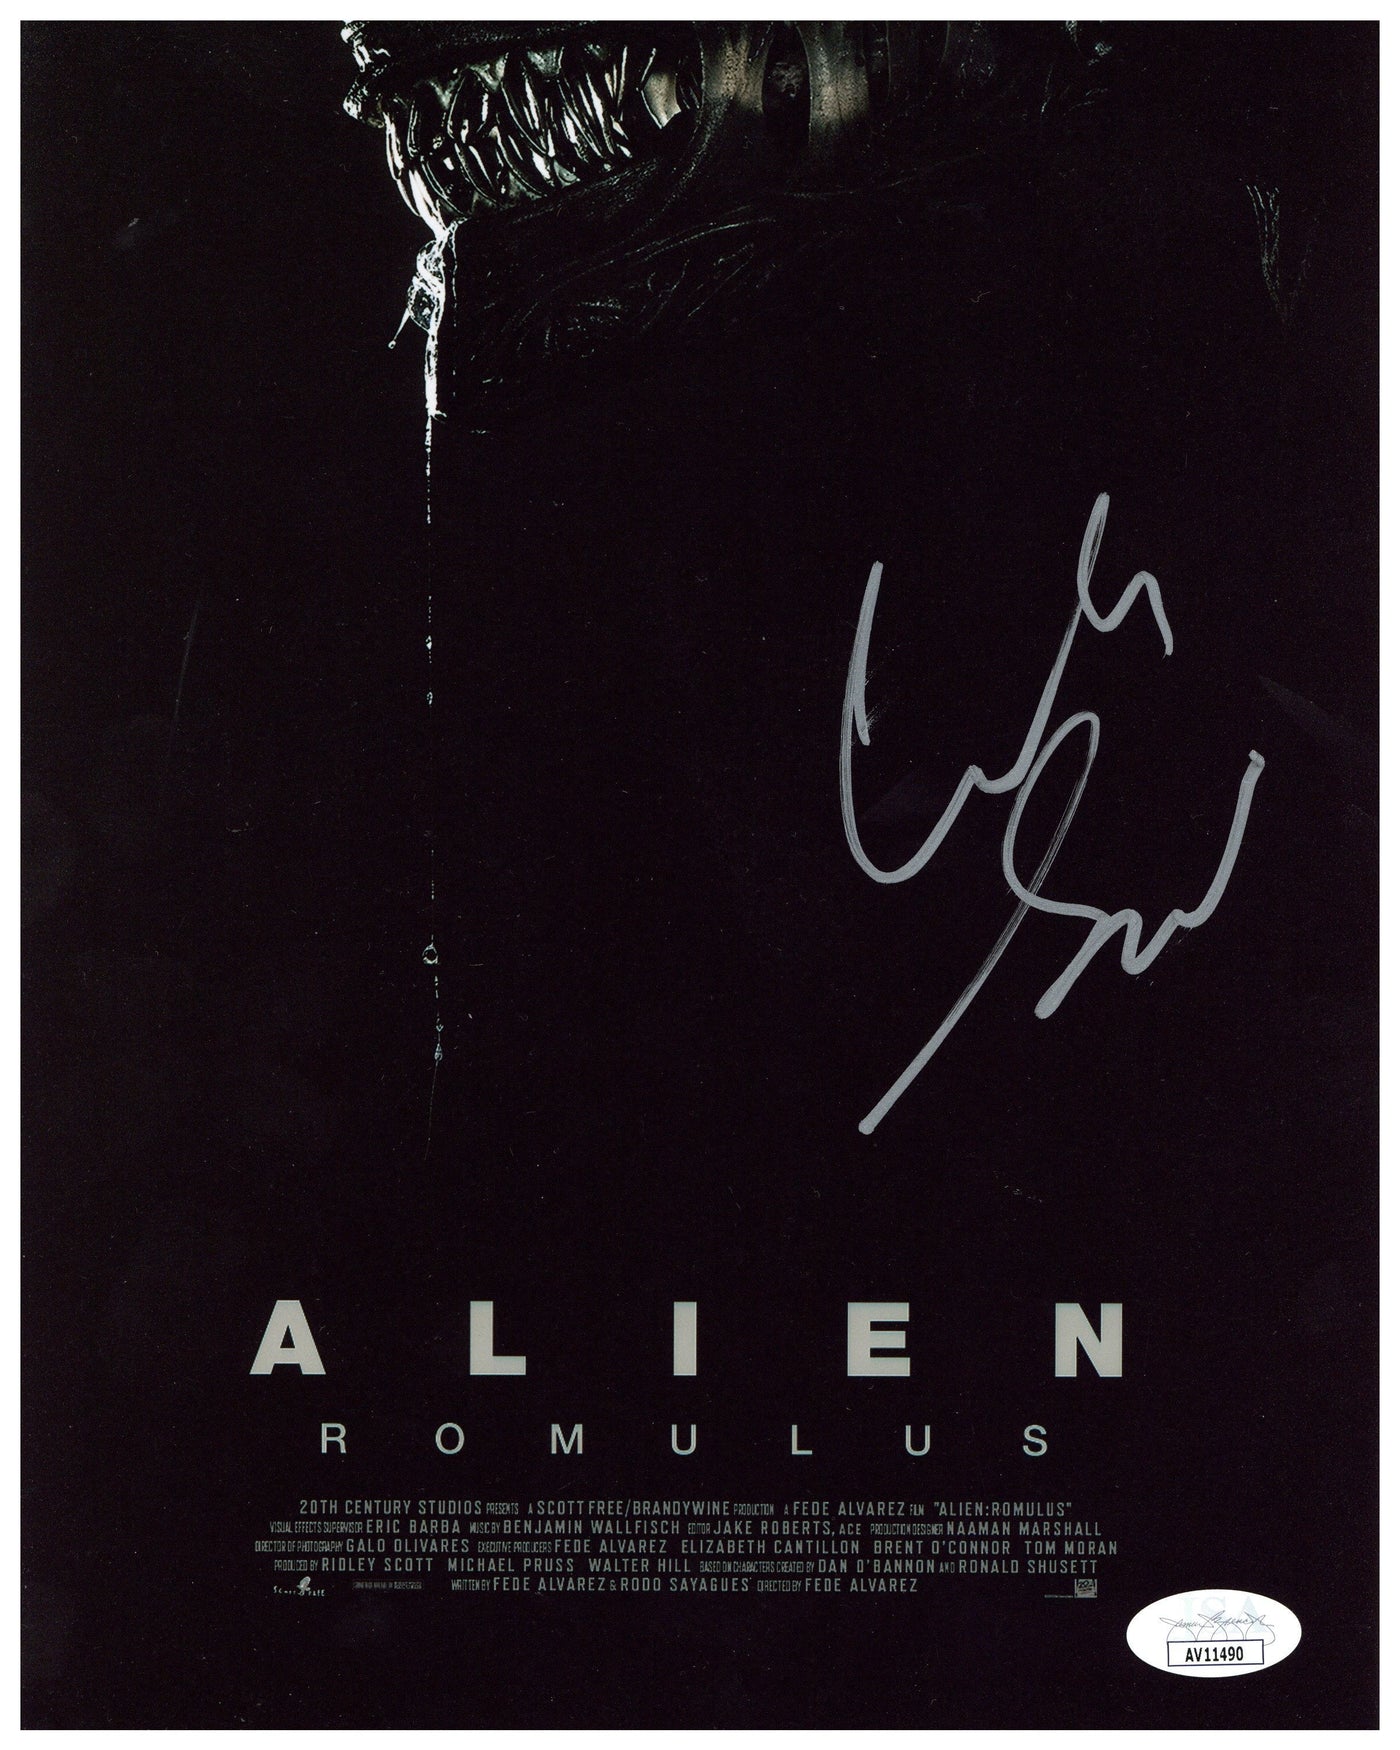 Cailee Spaeny Signed 8x10 Photo Alien Romulus Authentic Autographed JSA COA #2